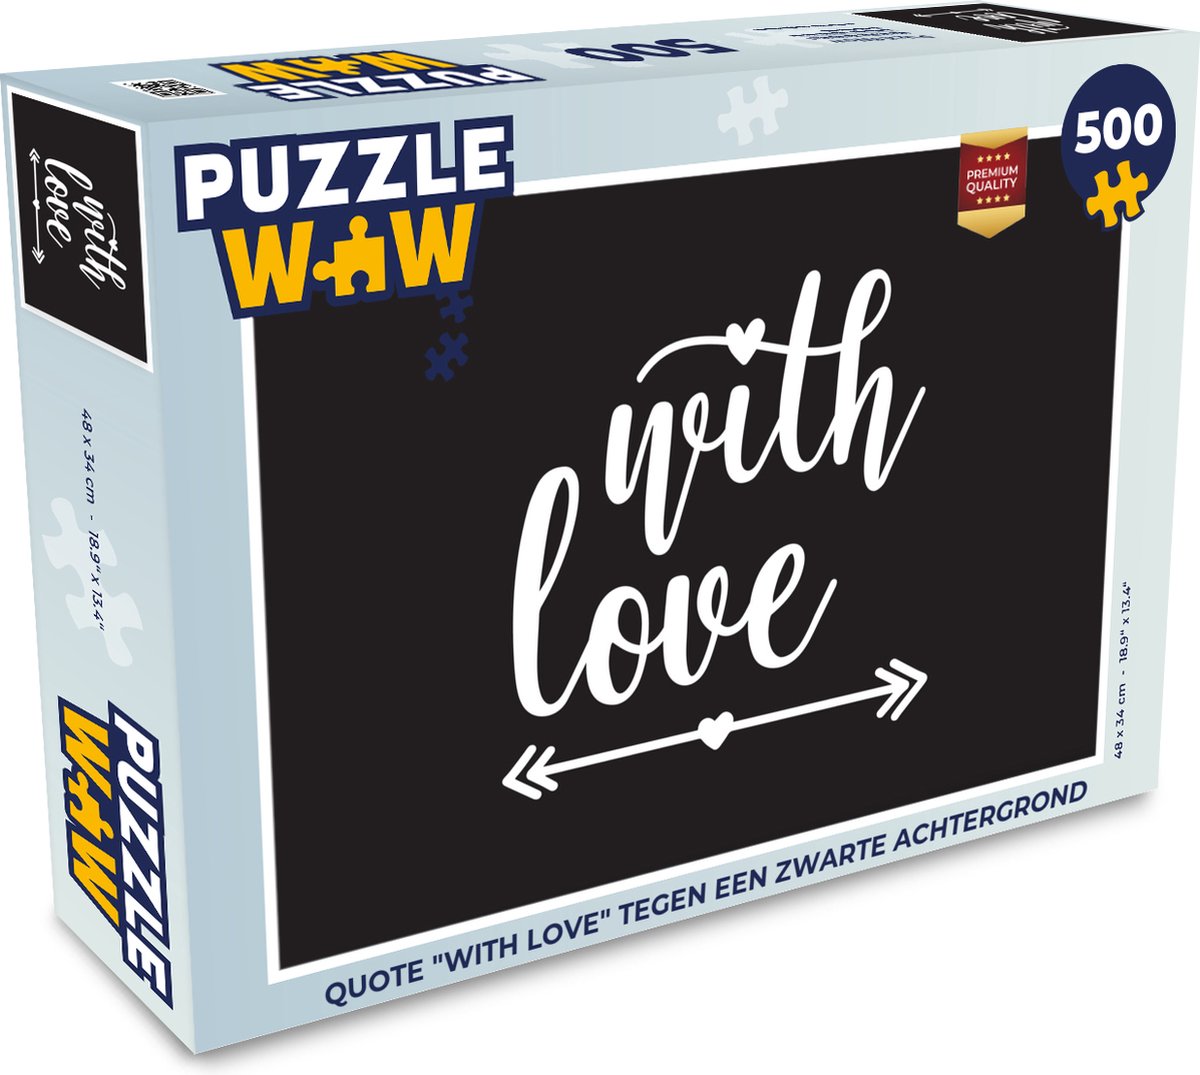 Afbeelding van product PuzzleWow  Puzzel With love - Quotes - Spreuken - Liefde - Legpuzzel - Puzzel 500 stukjes